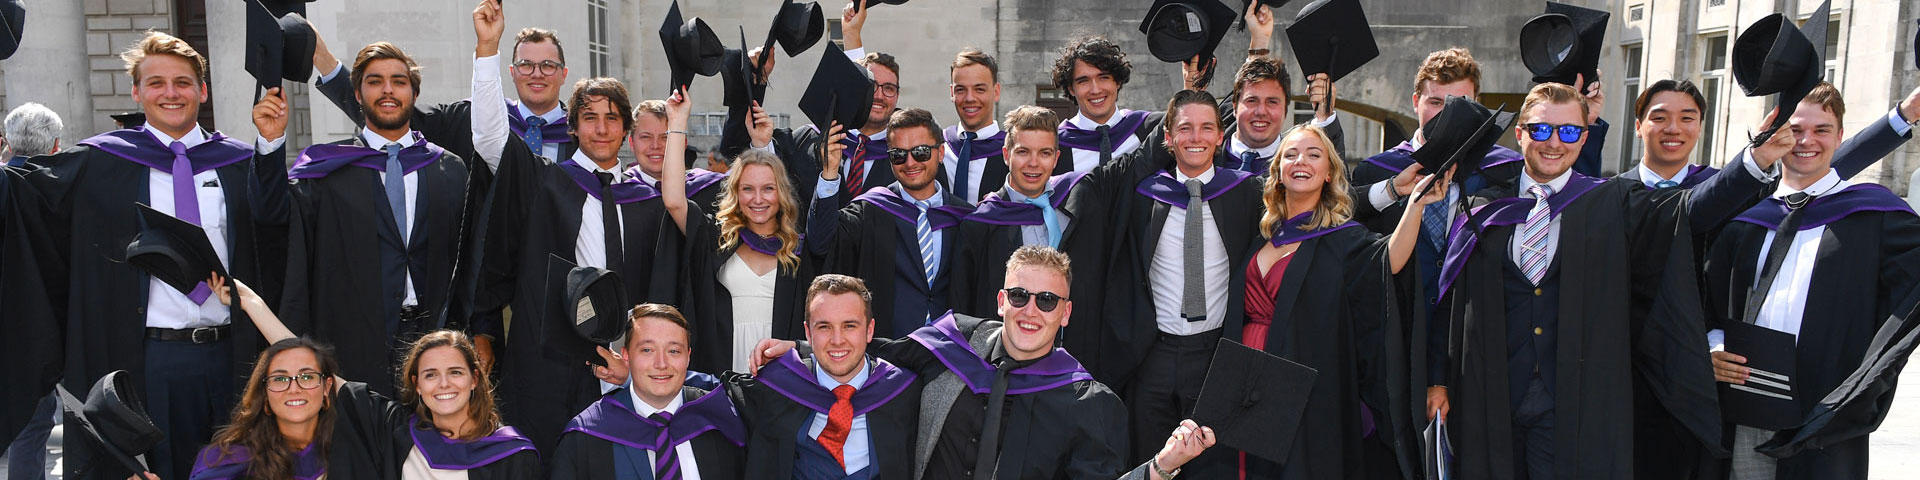 A group of graduates at graduation 2019